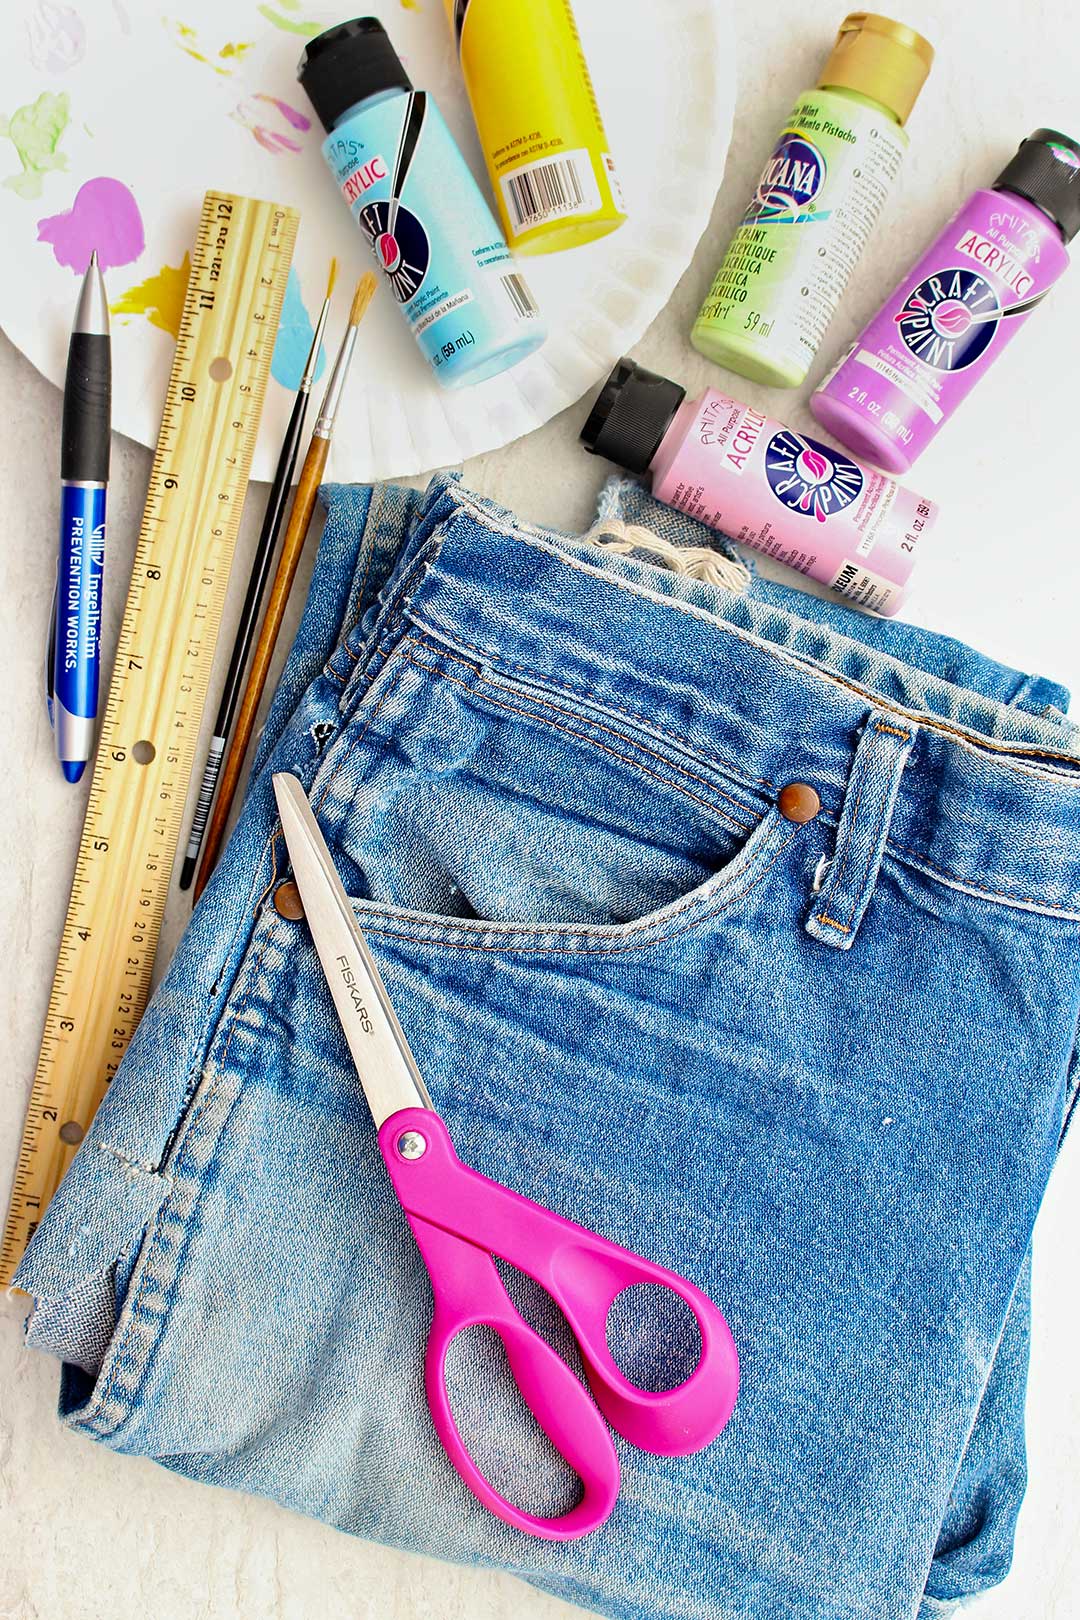 Jeans, pink scissors, acrylic paints, ruler, paintbrushes and pen.